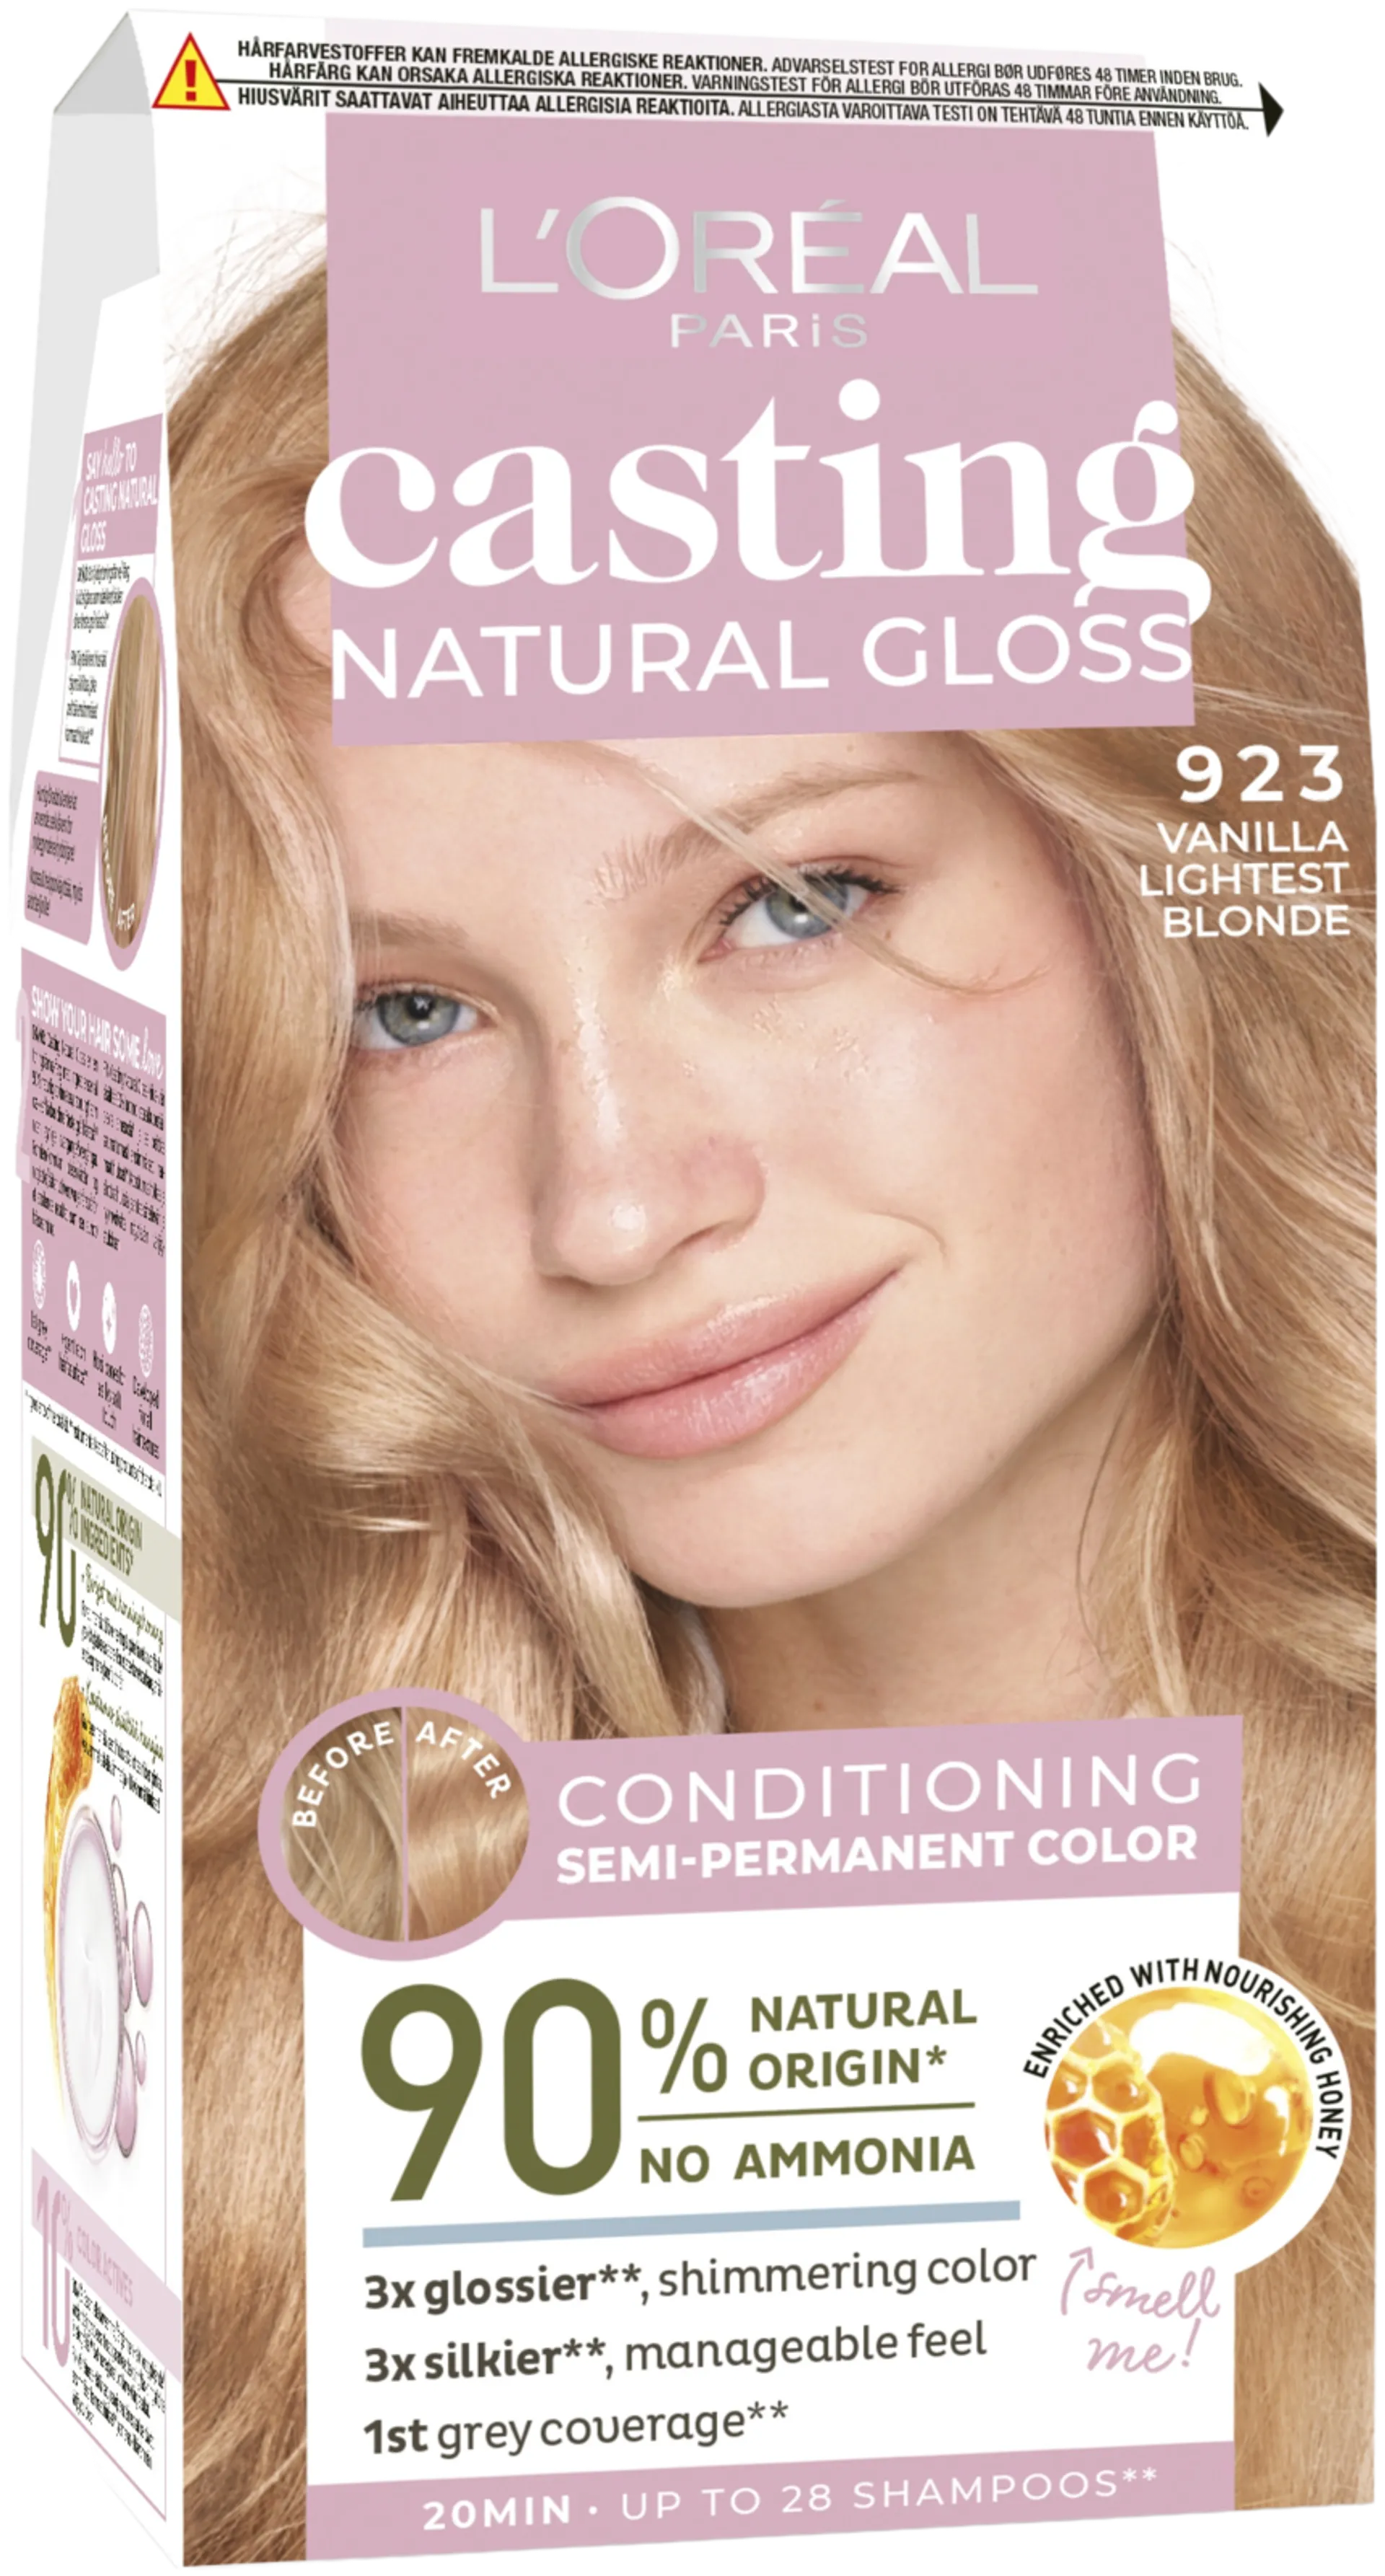 L'Oréal Paris Casting Natural Gloss 823 Light Blonde Vanille kevytväri 1kpl - 2